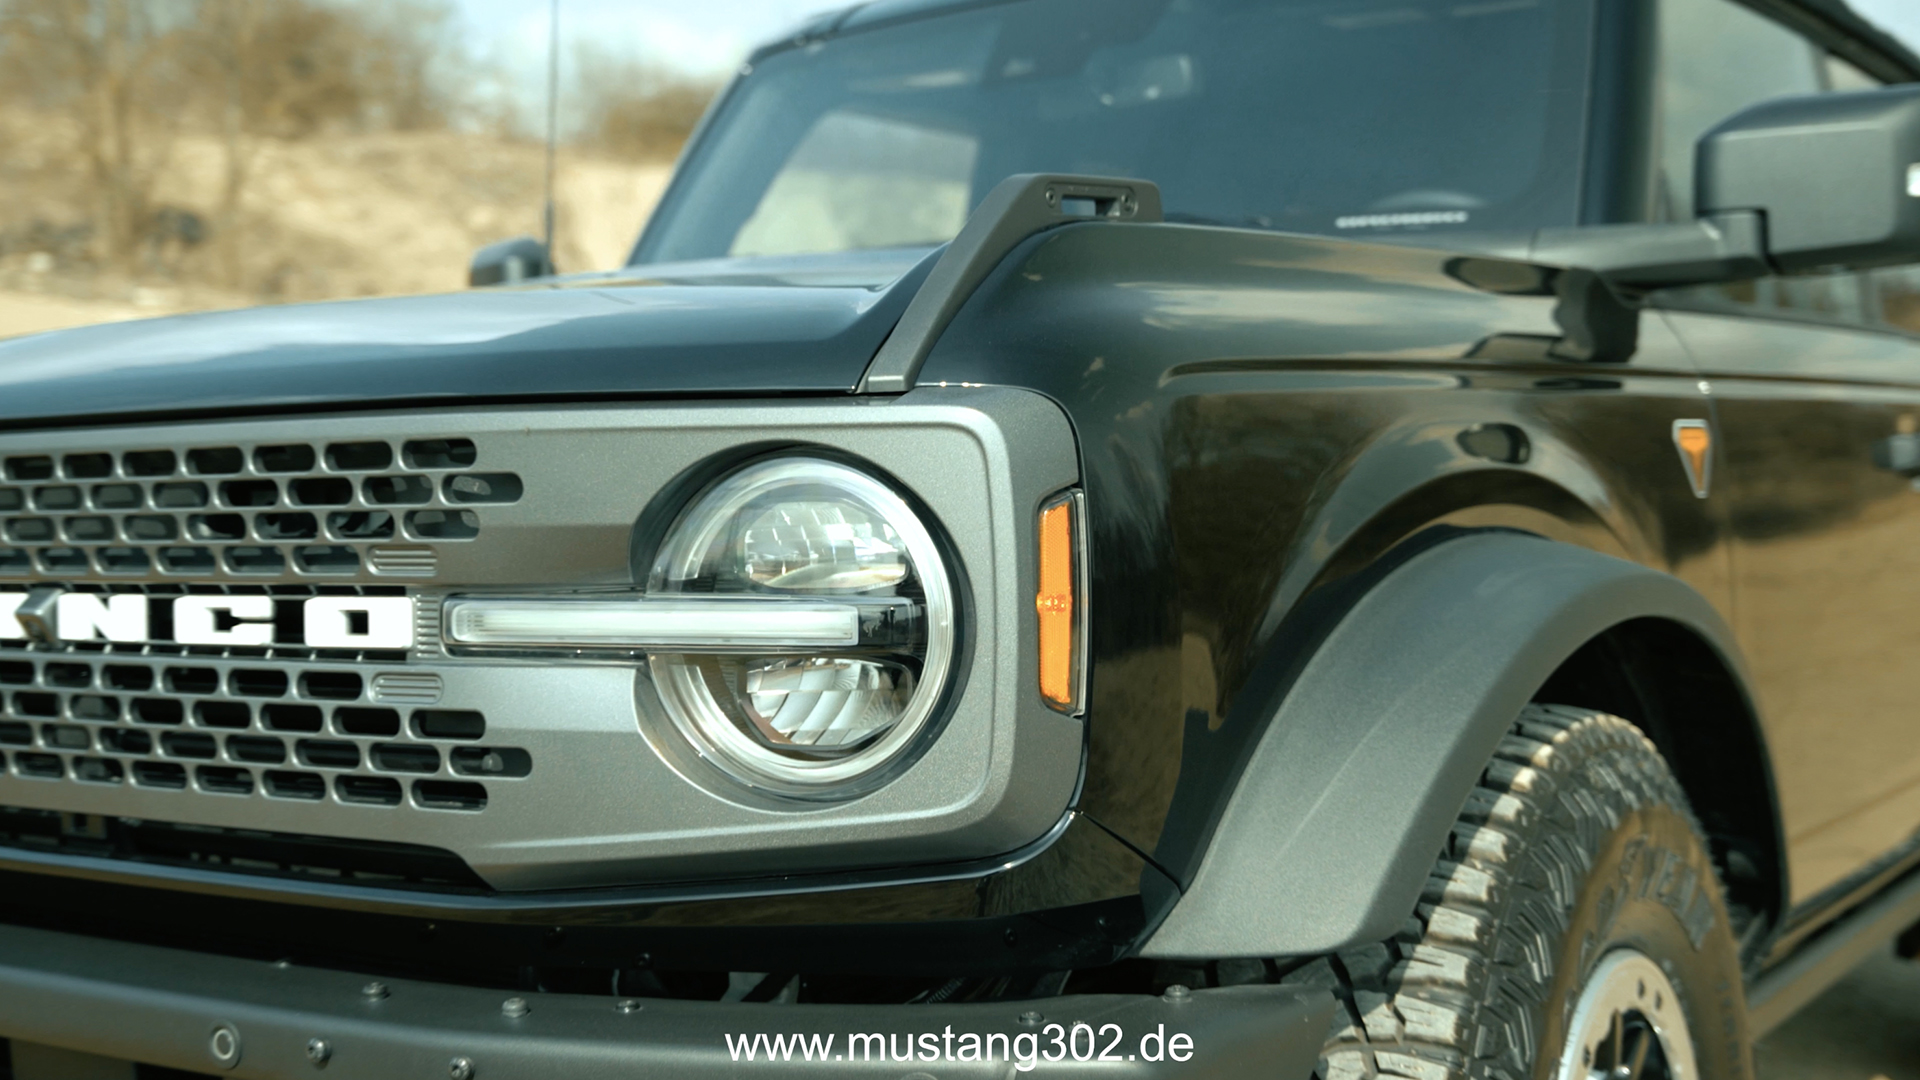 Mustang302-Bronco-Design-V3